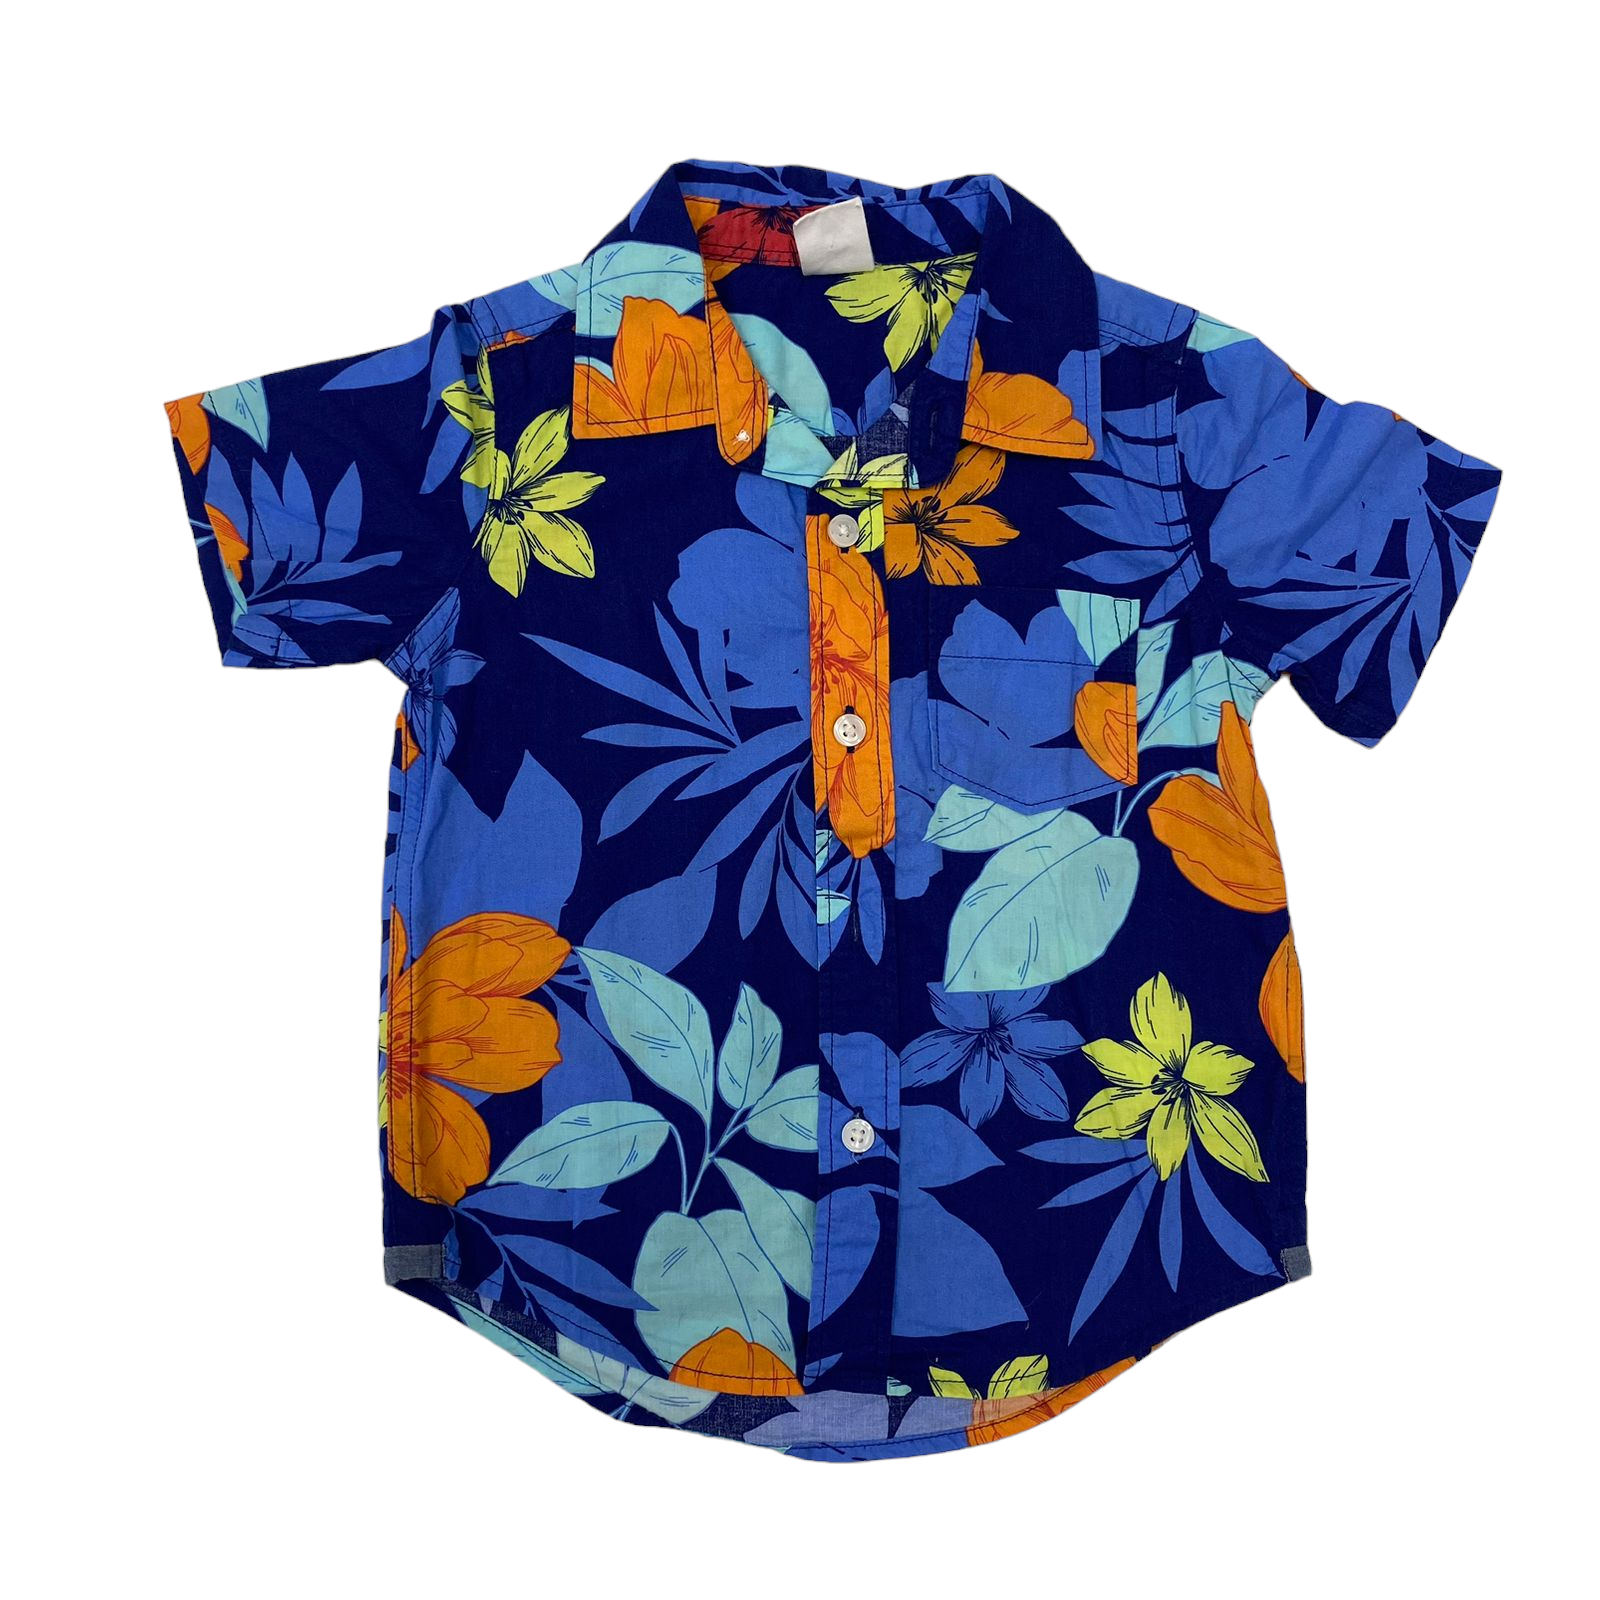 Camisa azul y naranjo floreada con bolsillo